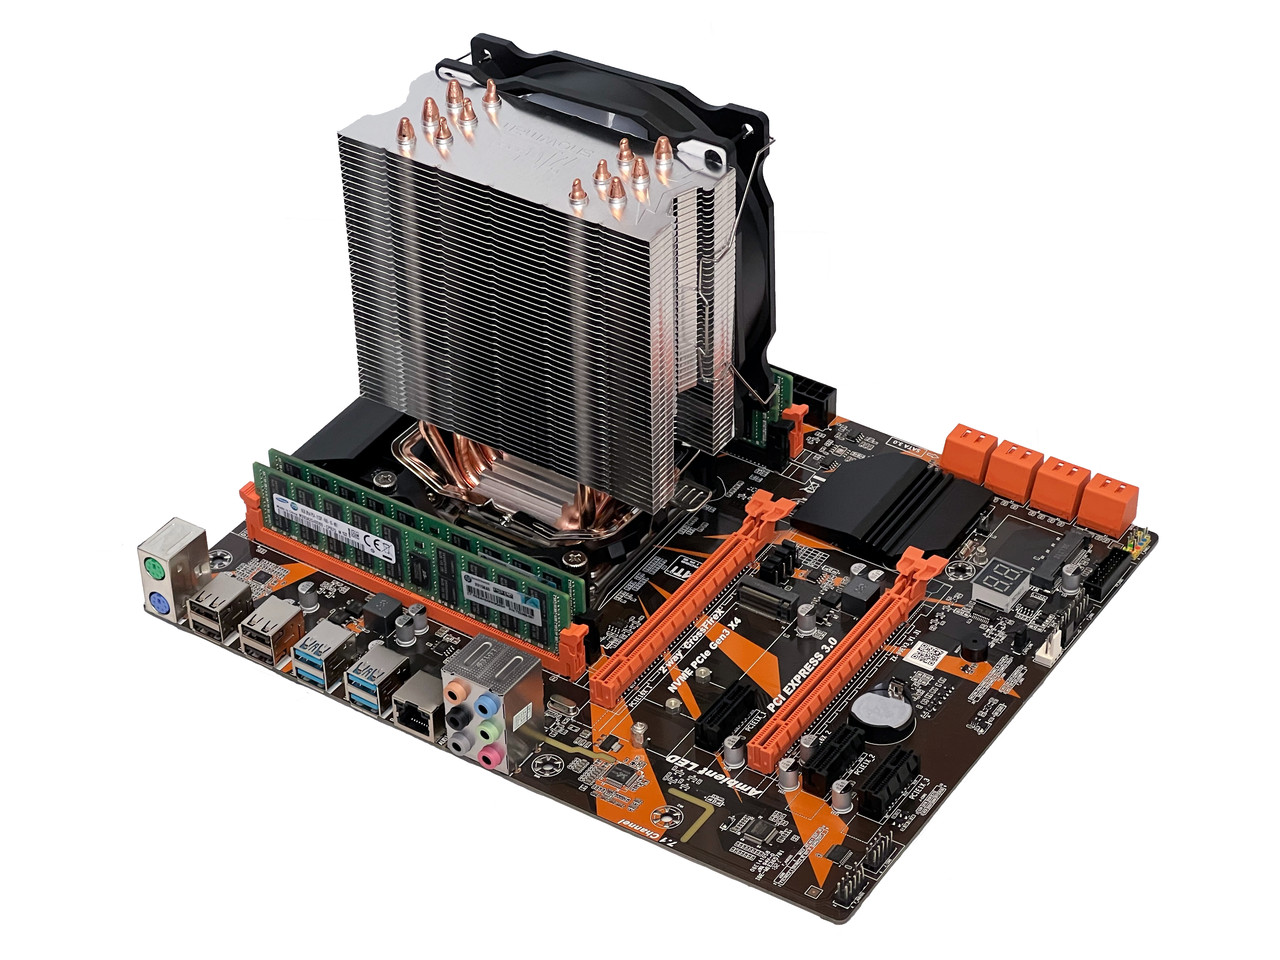 Комплект X99 + Xeon E5-2667v4 + 16GB RAM + Куллер, LGA 2011v3